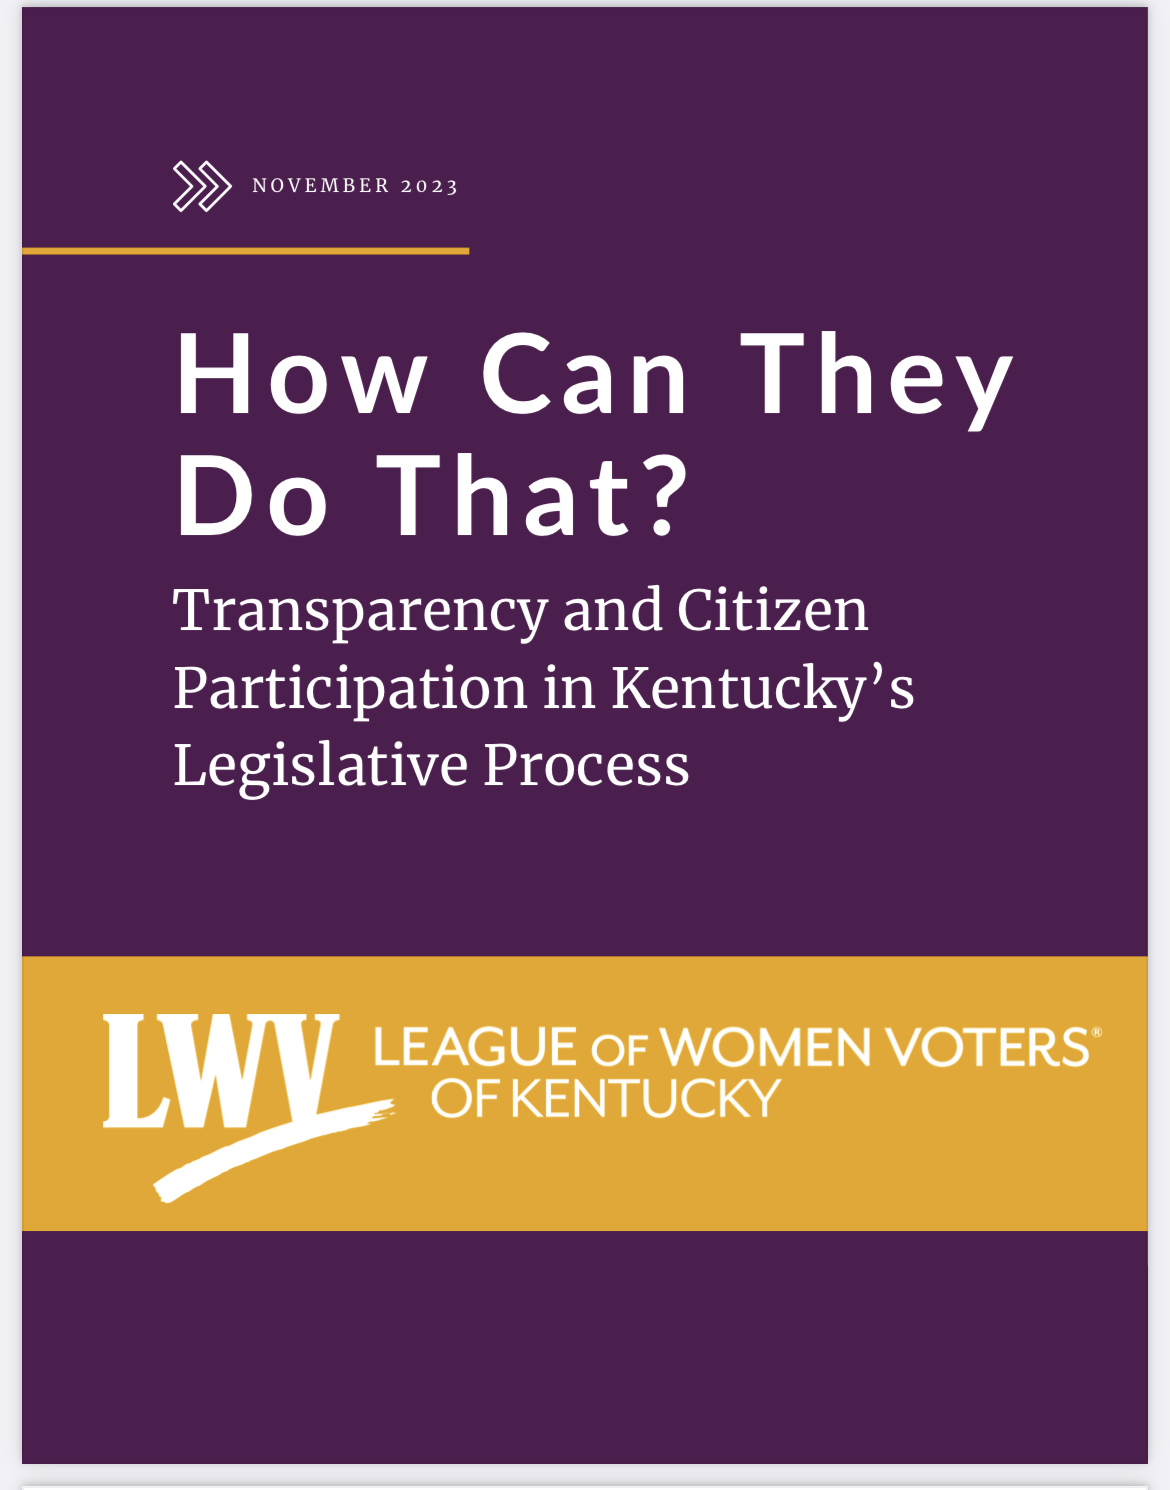 Cover, League of Women Voters study of Kentucky legislative process